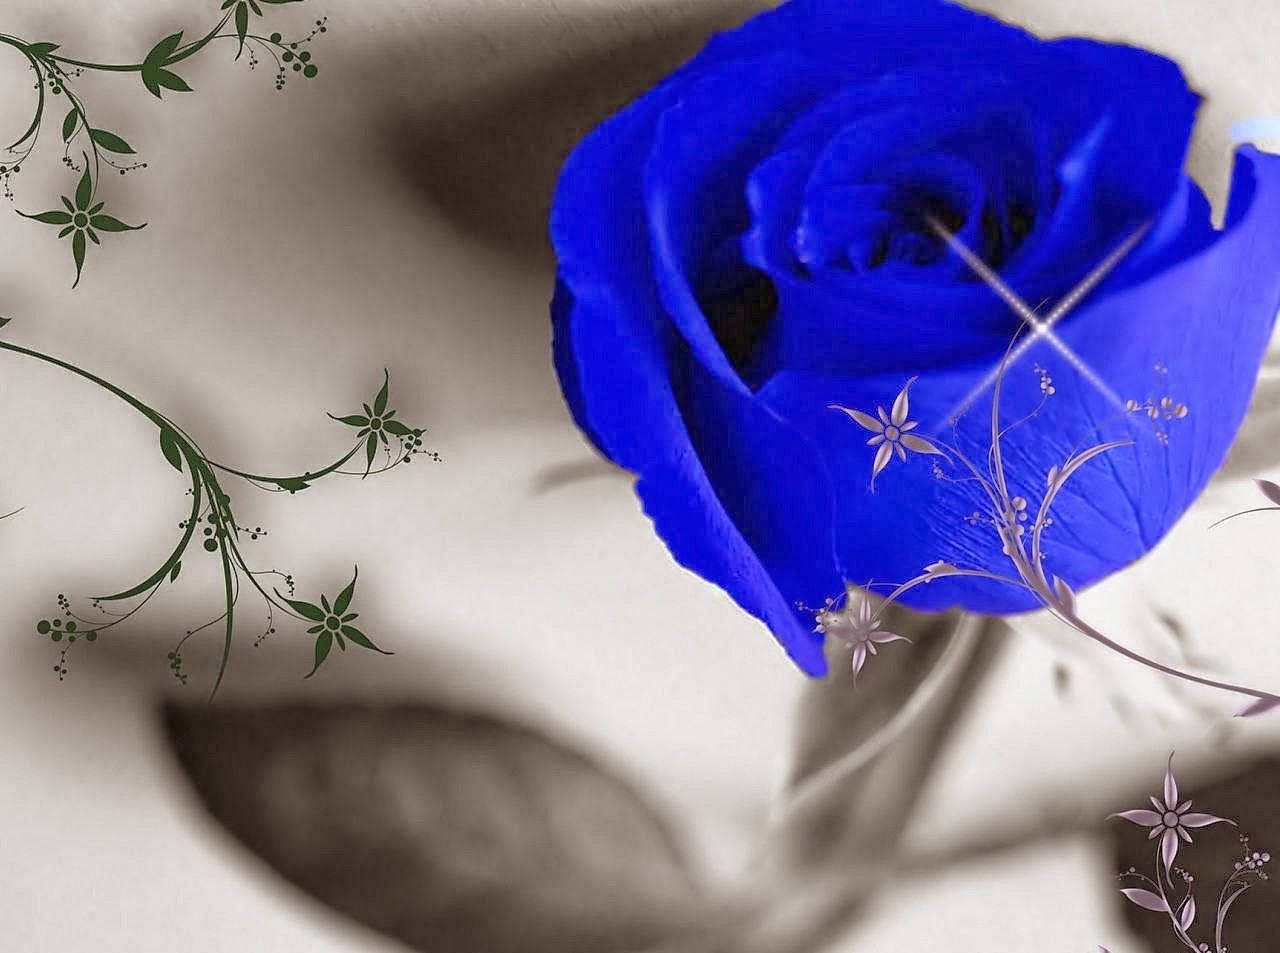 Blue Rose Flowers Image Free Download